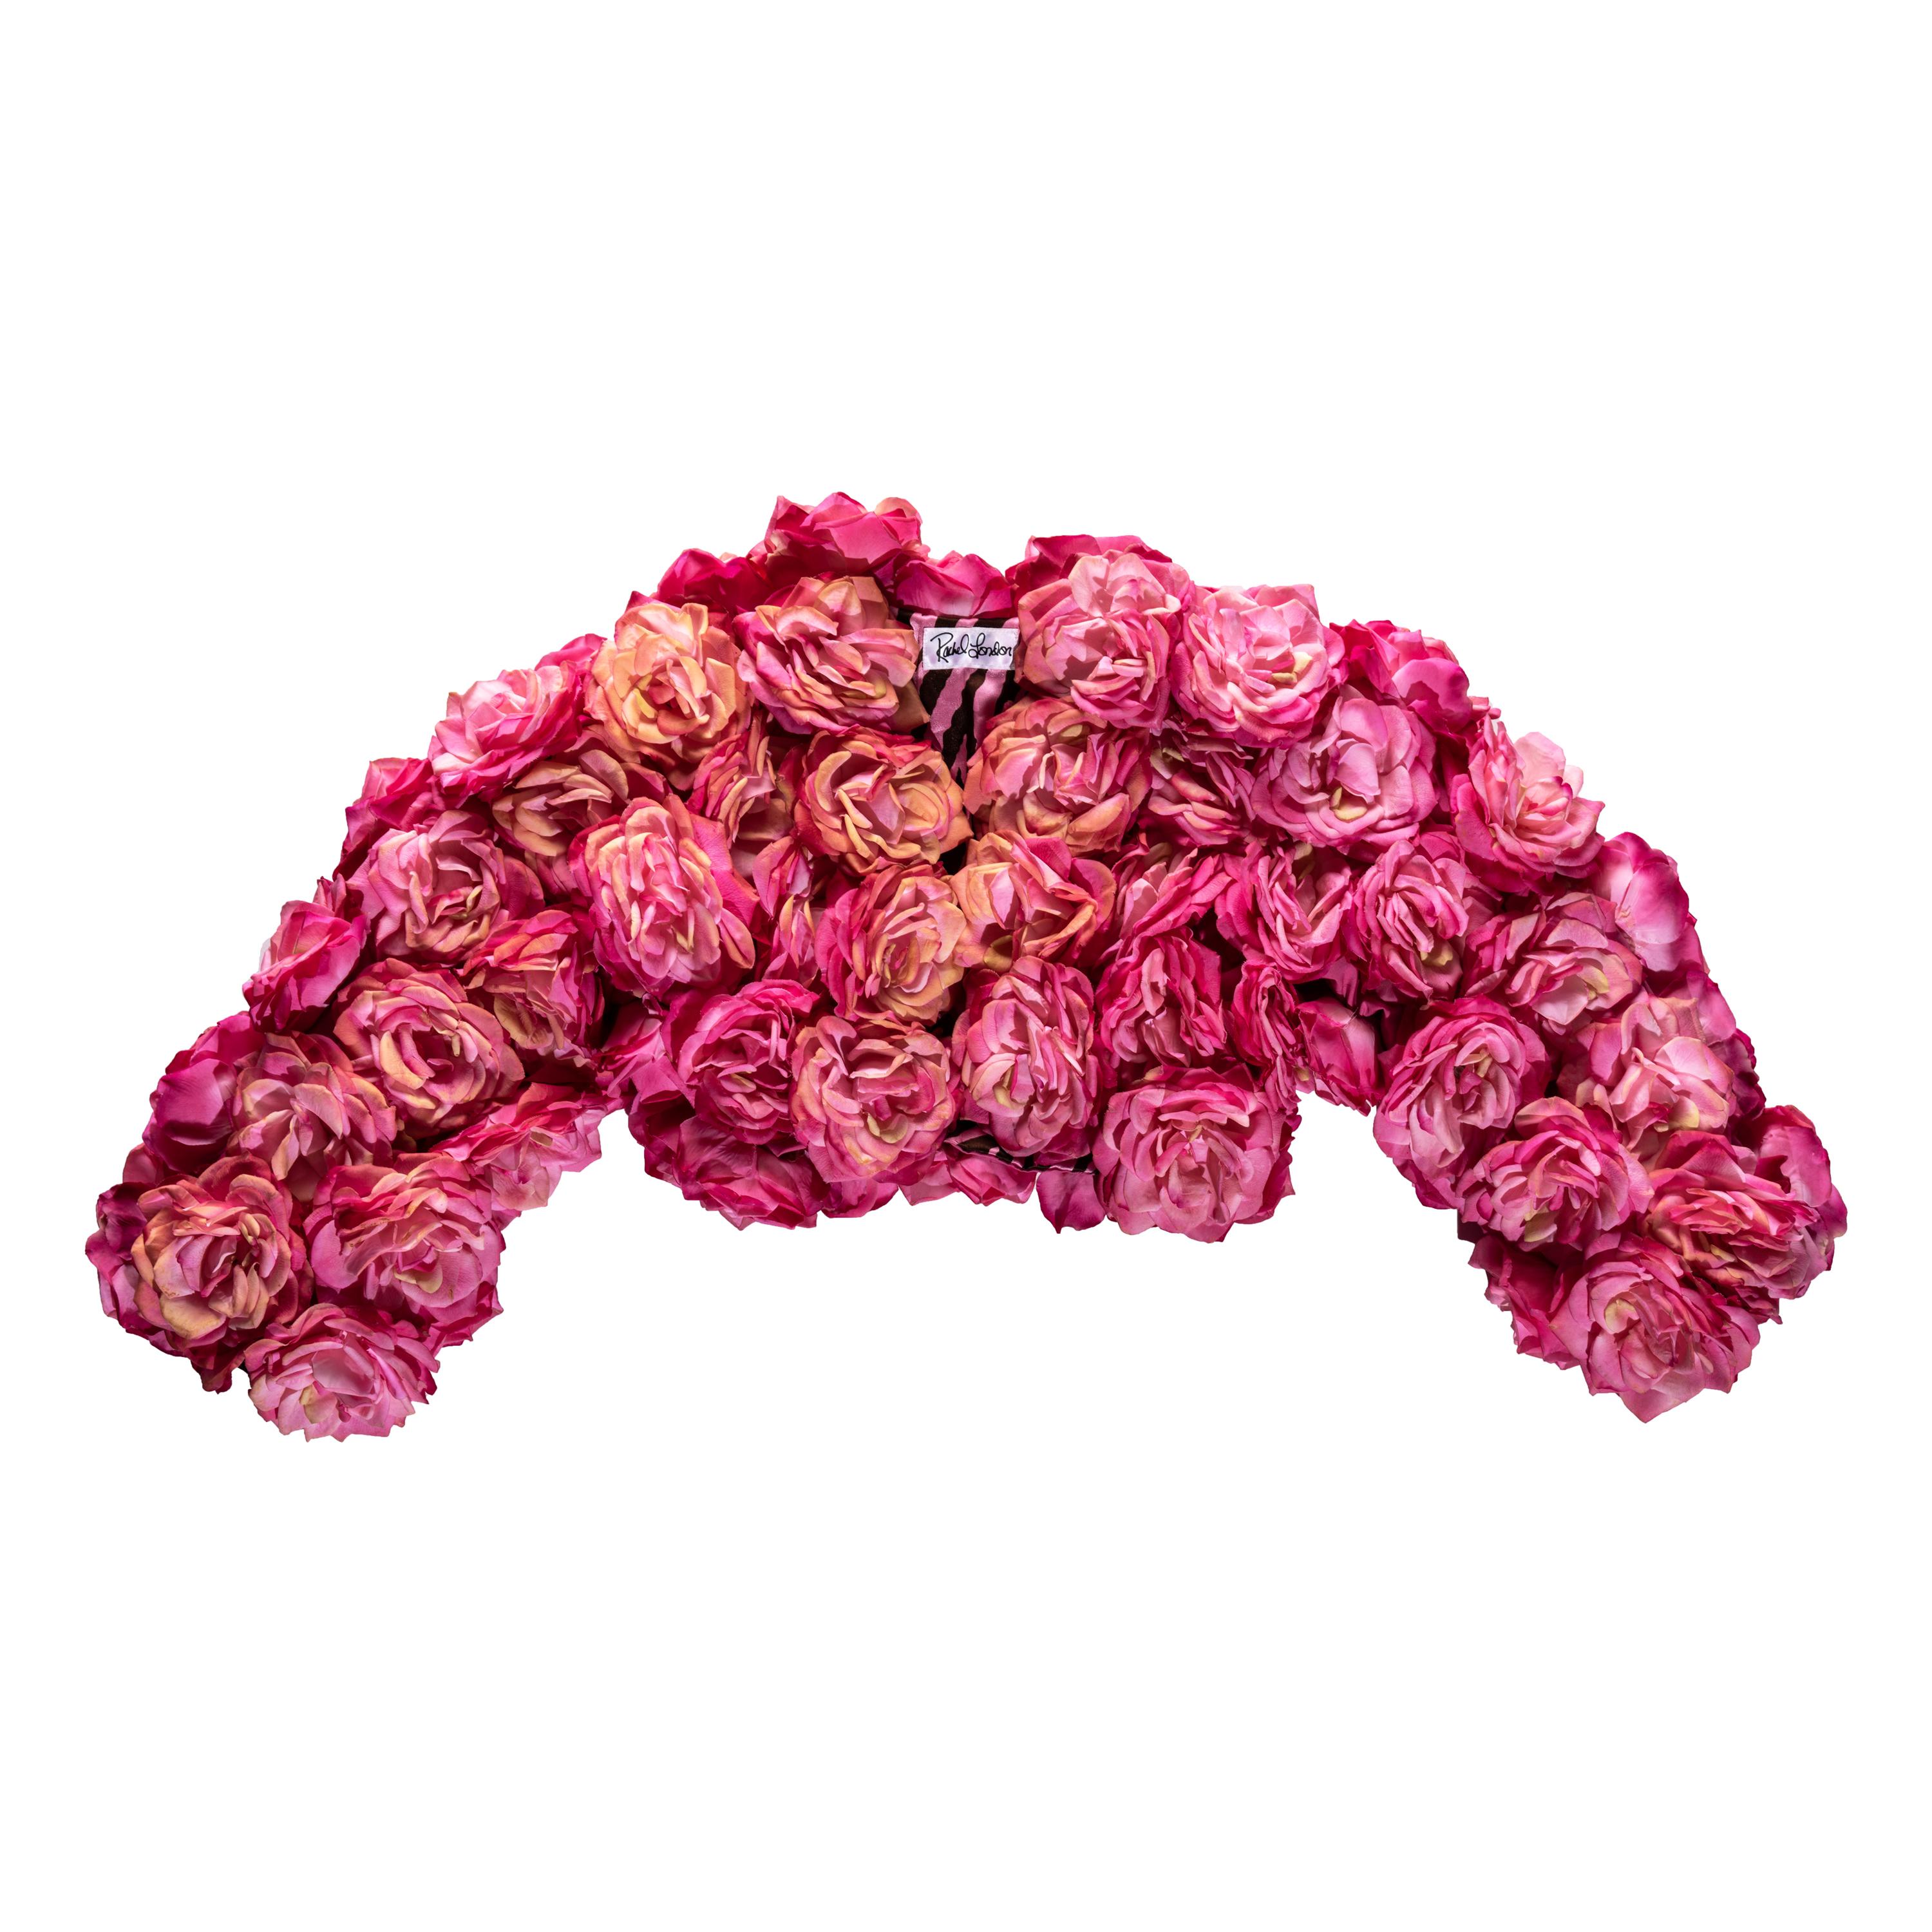 Rachel London pink rose bolero jacket, c. 1988